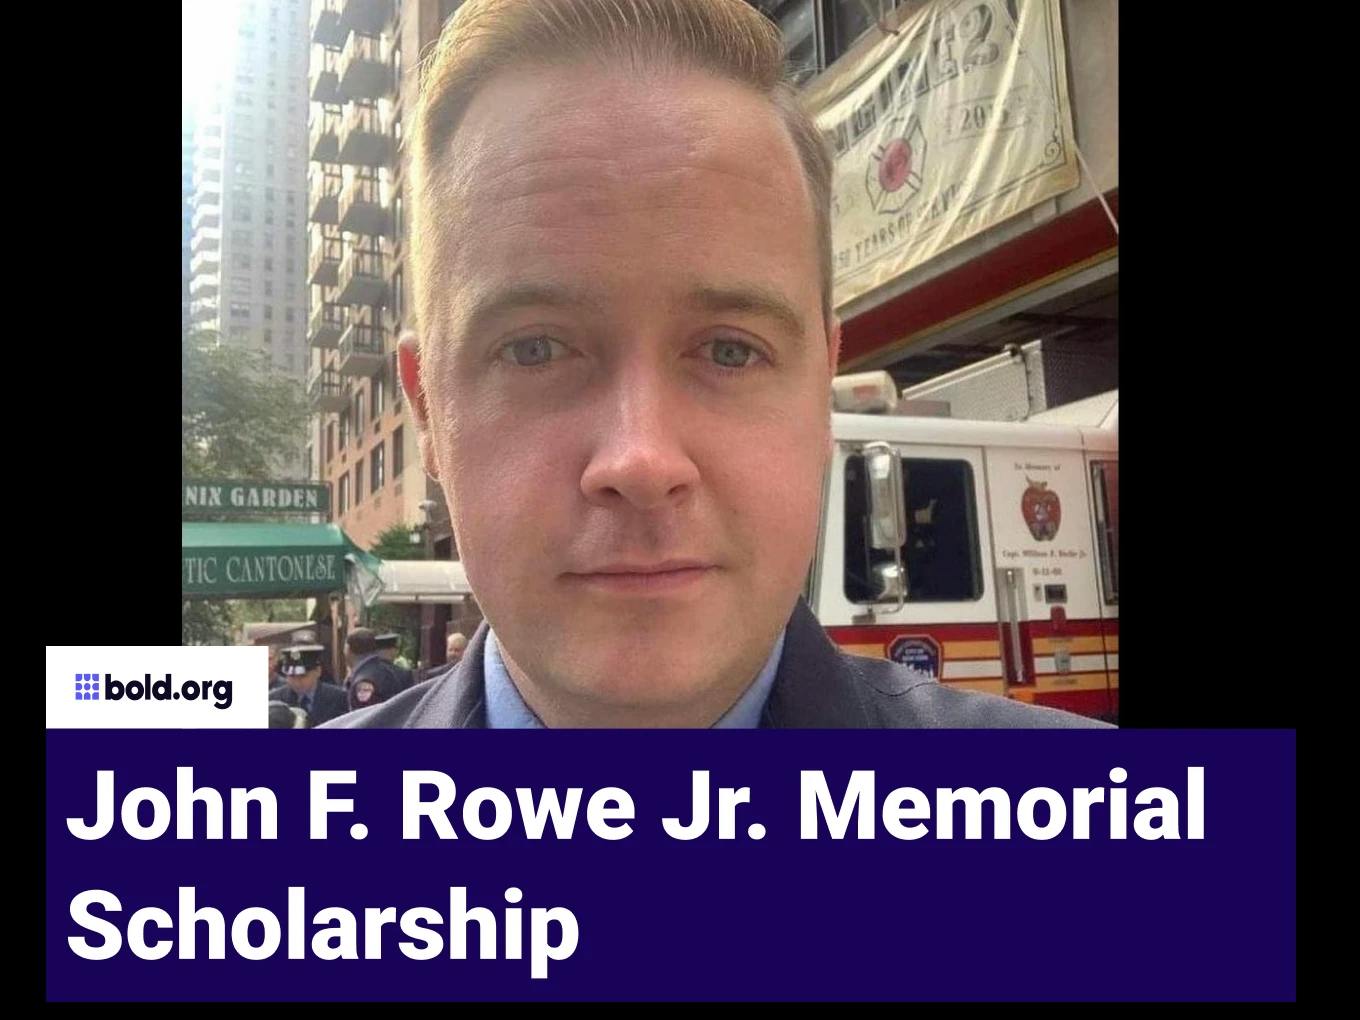 John F. Rowe, Jr. Memorial Scholarship